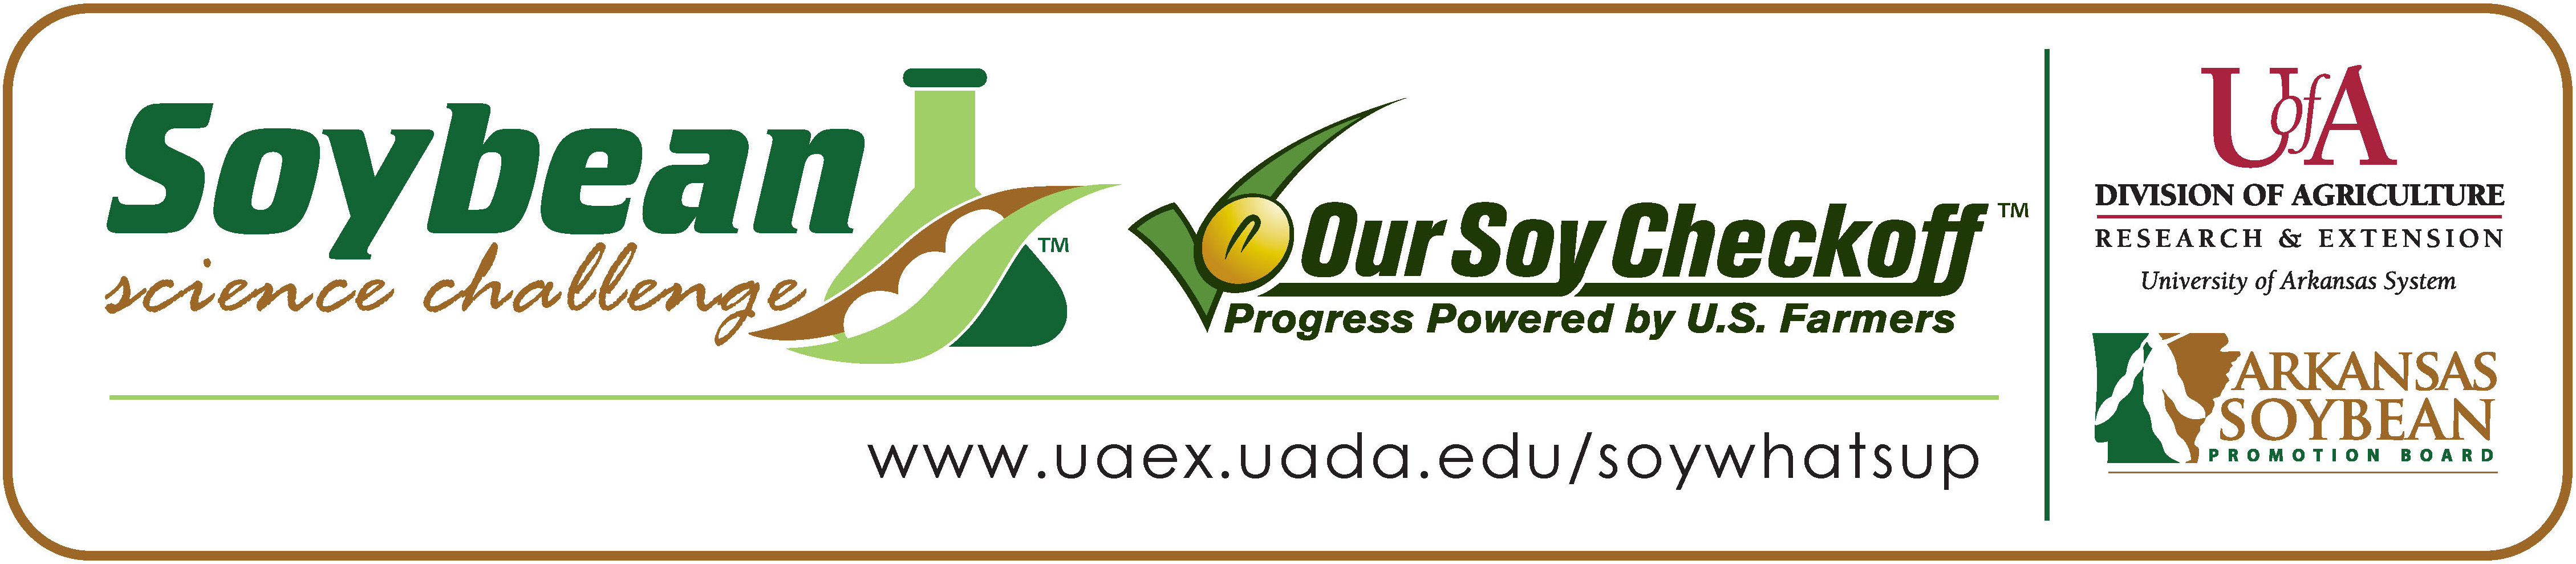 soybean science challenge header